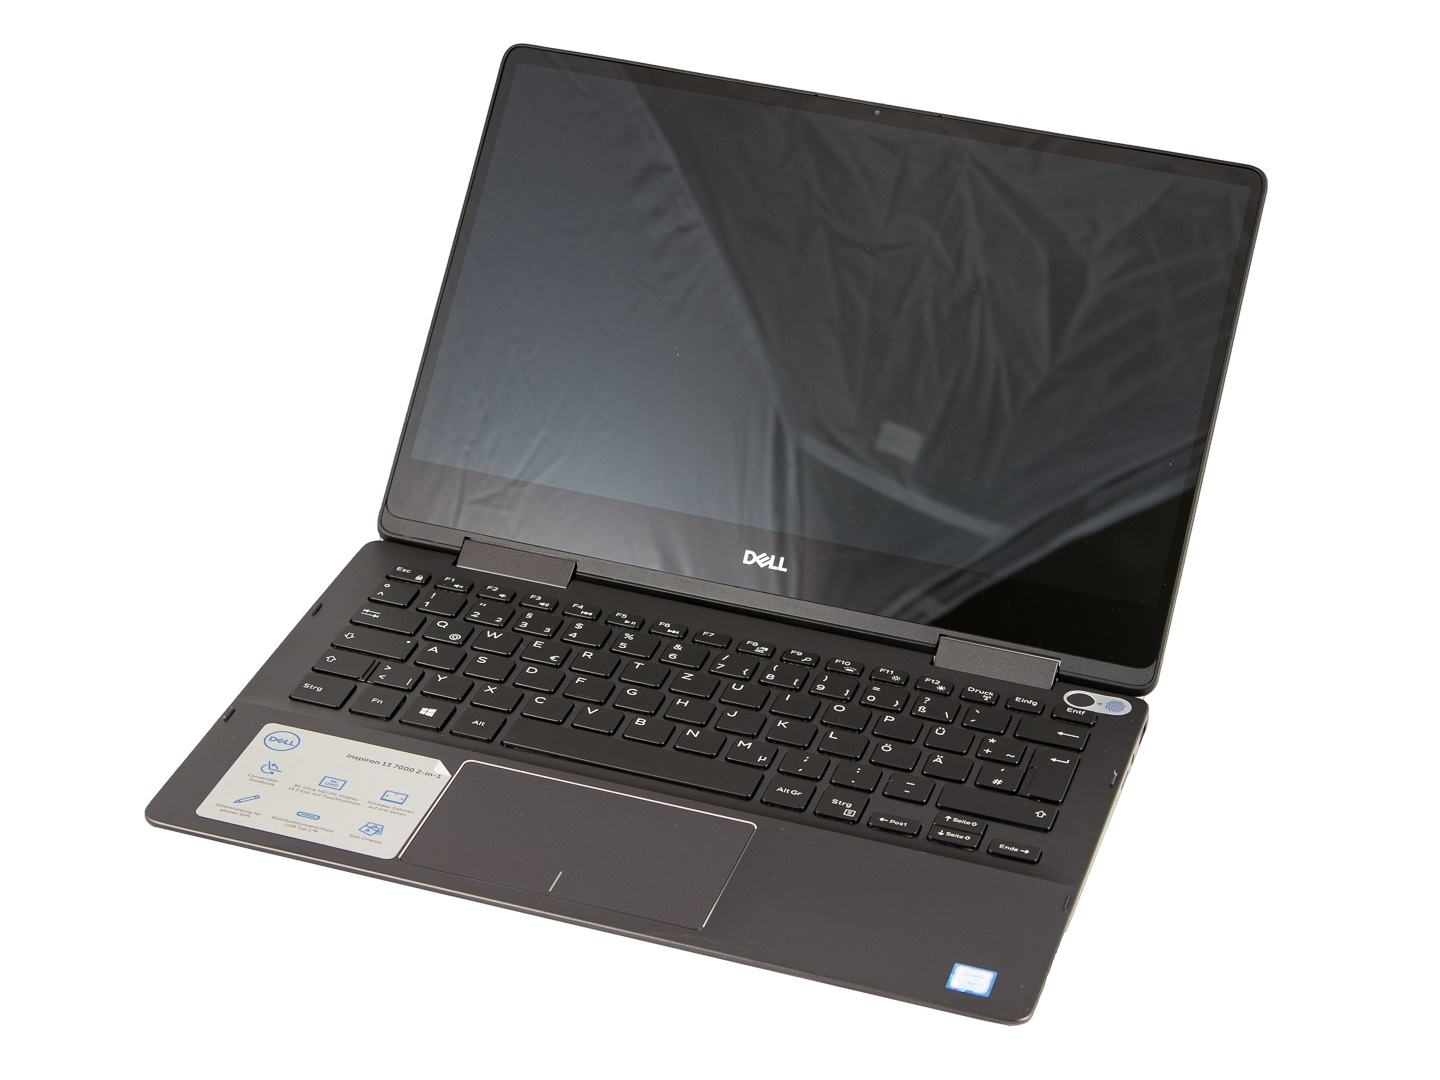 đánh giá laptop Dell Inspiron 13 7386 2 in 1